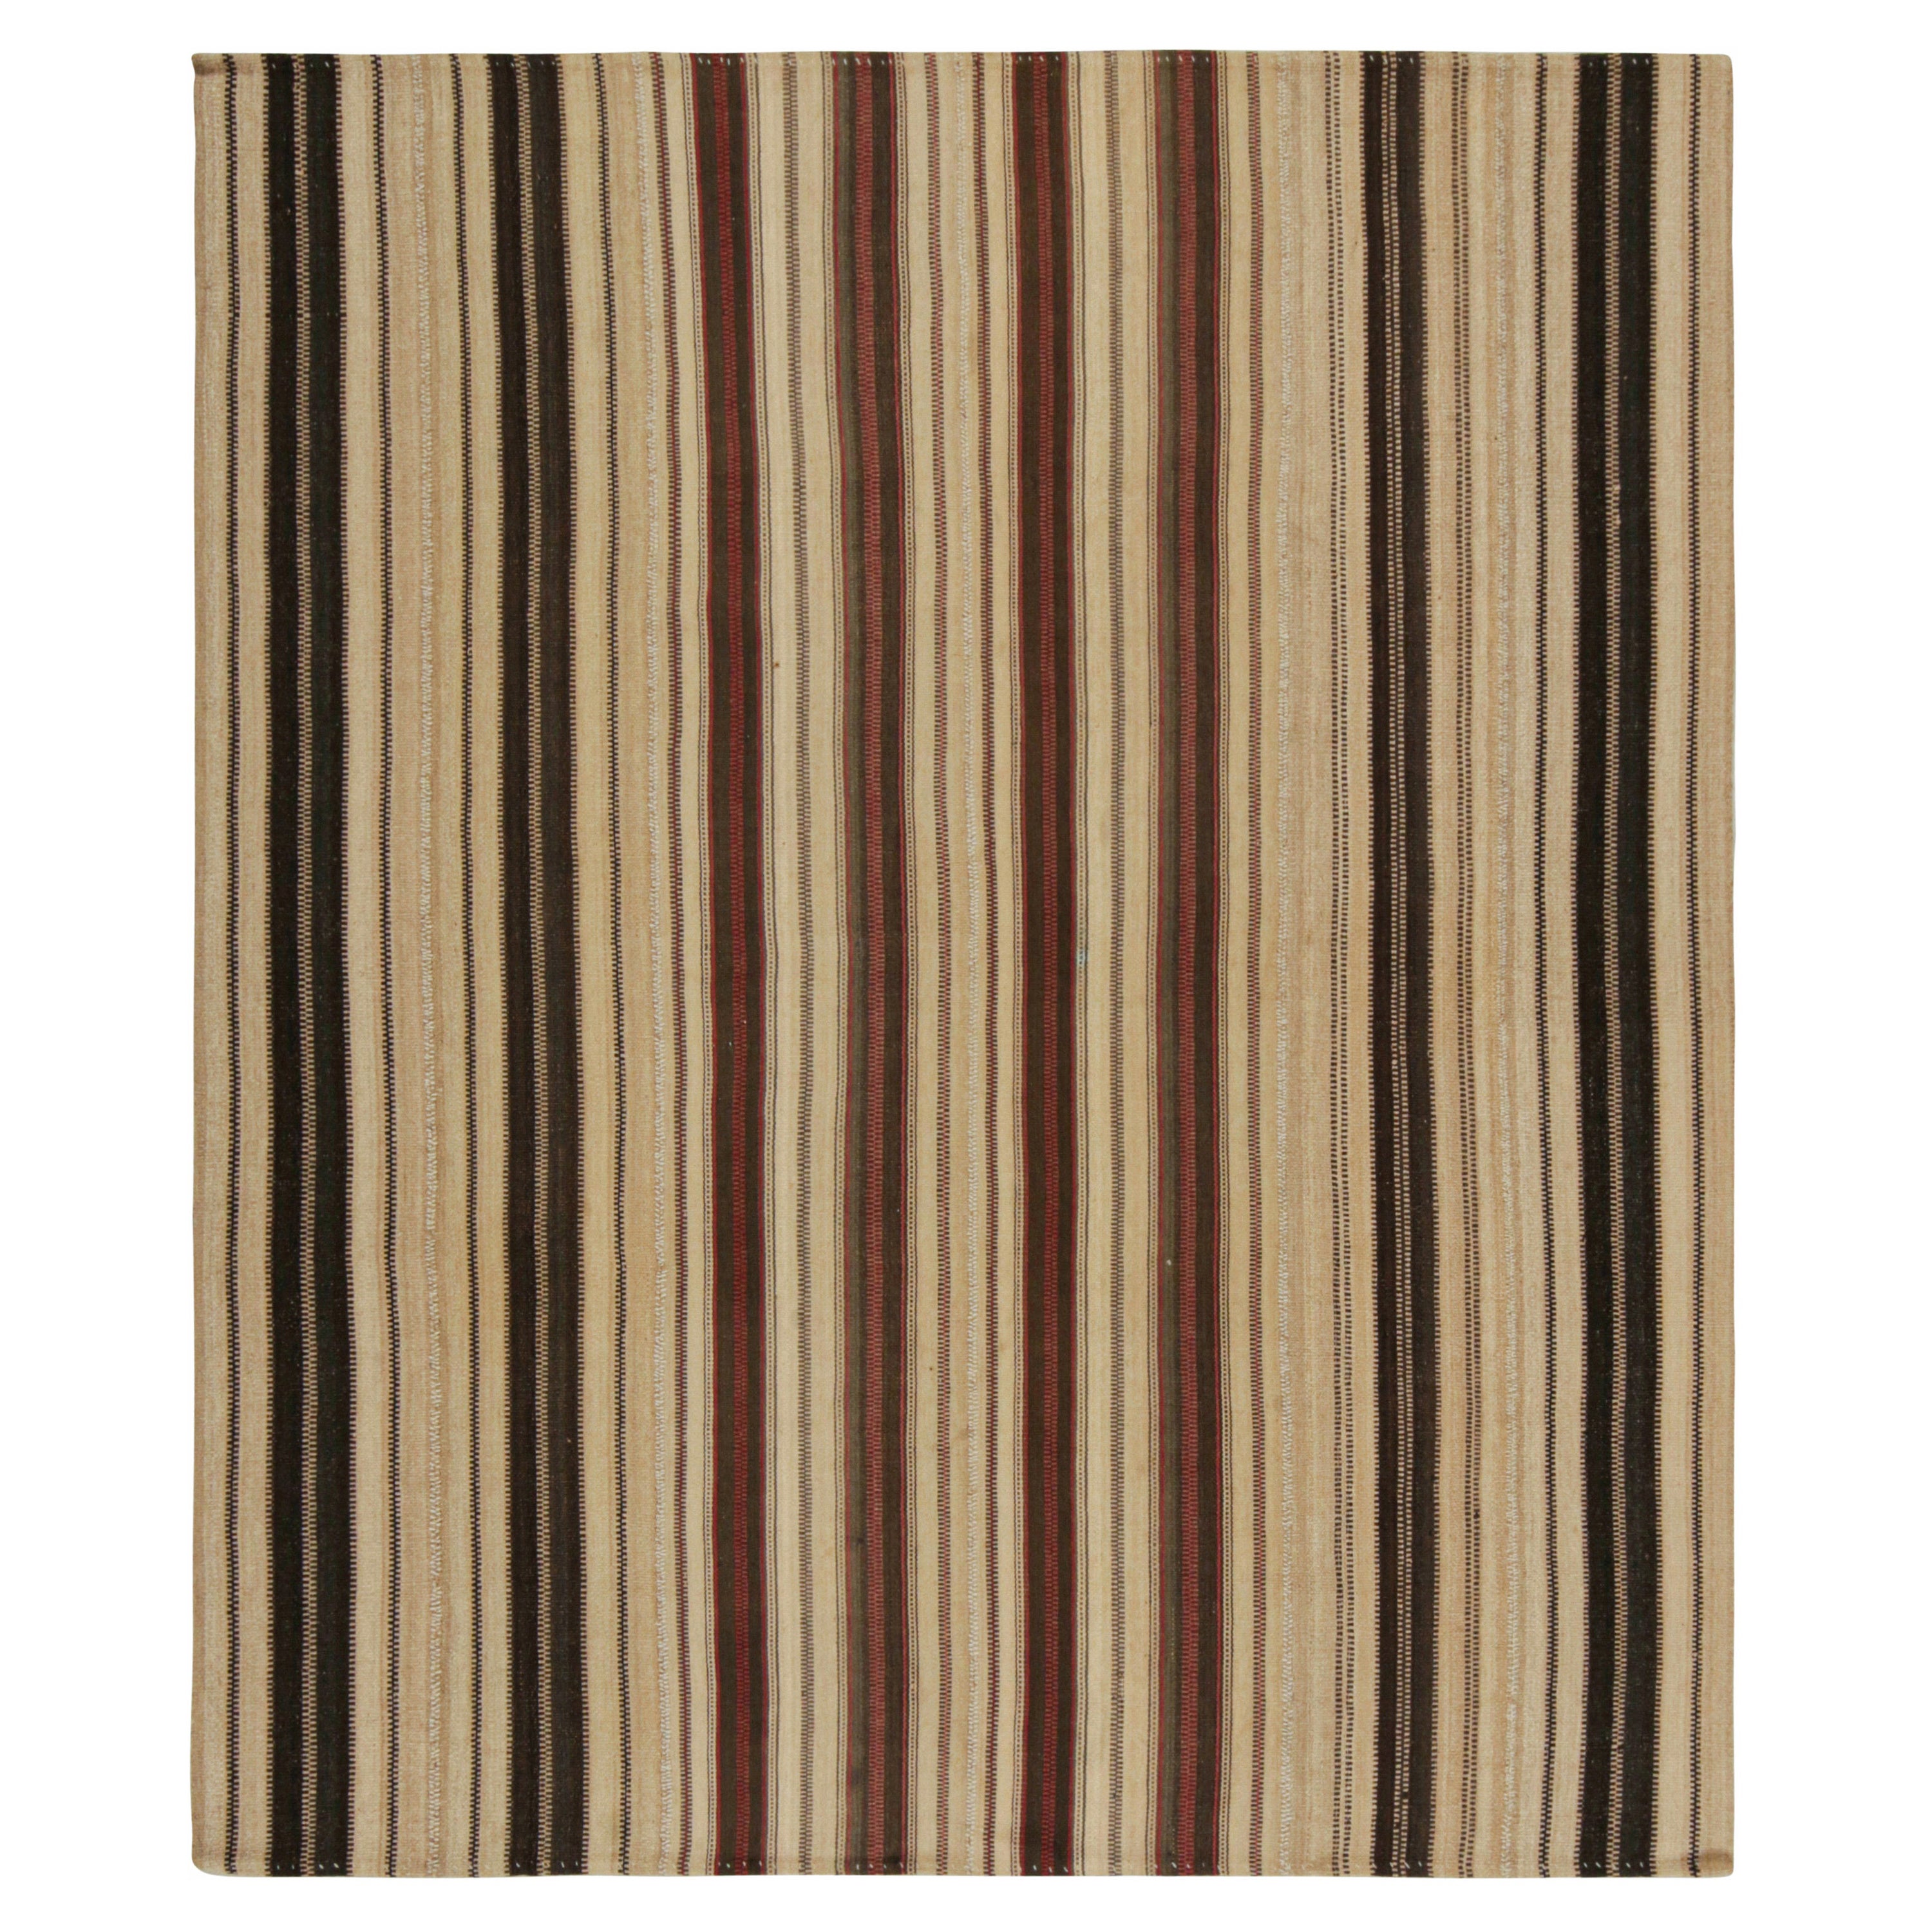 Vintage Persian Kilim in Beige & Brown Stripes in Panel Style